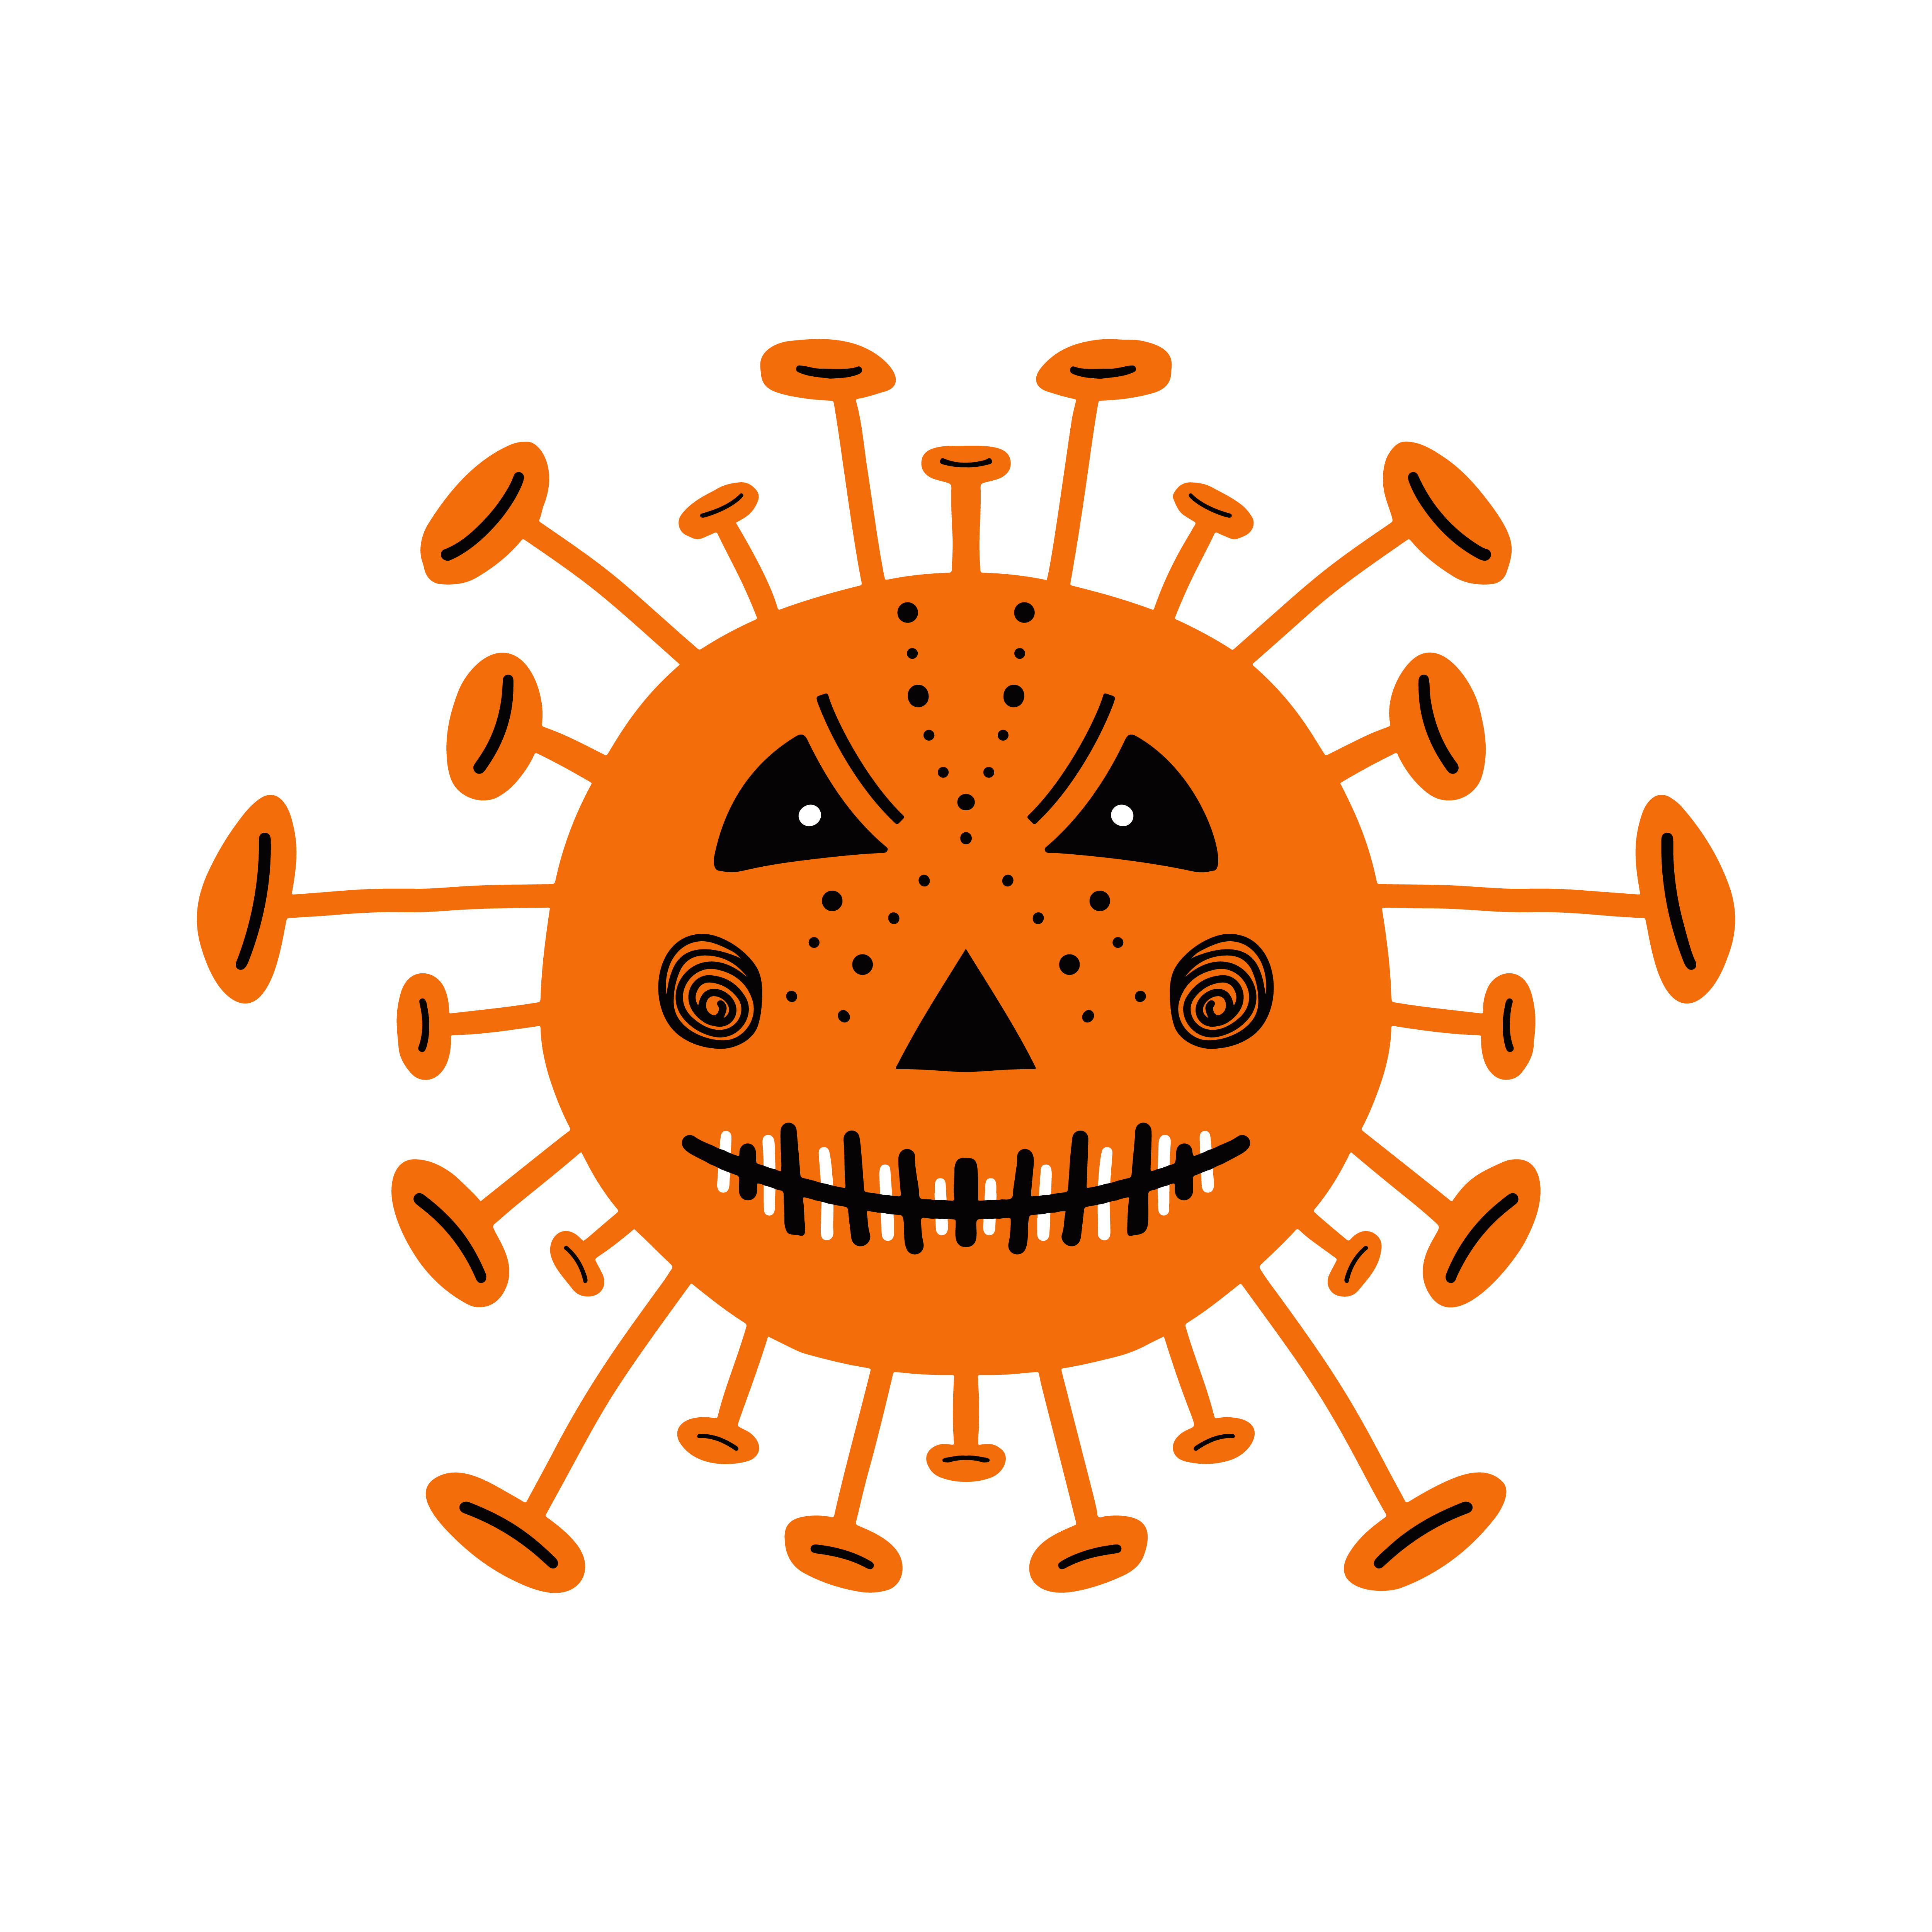 coronavírus de halloween laranja com cara assustadora. isolado no